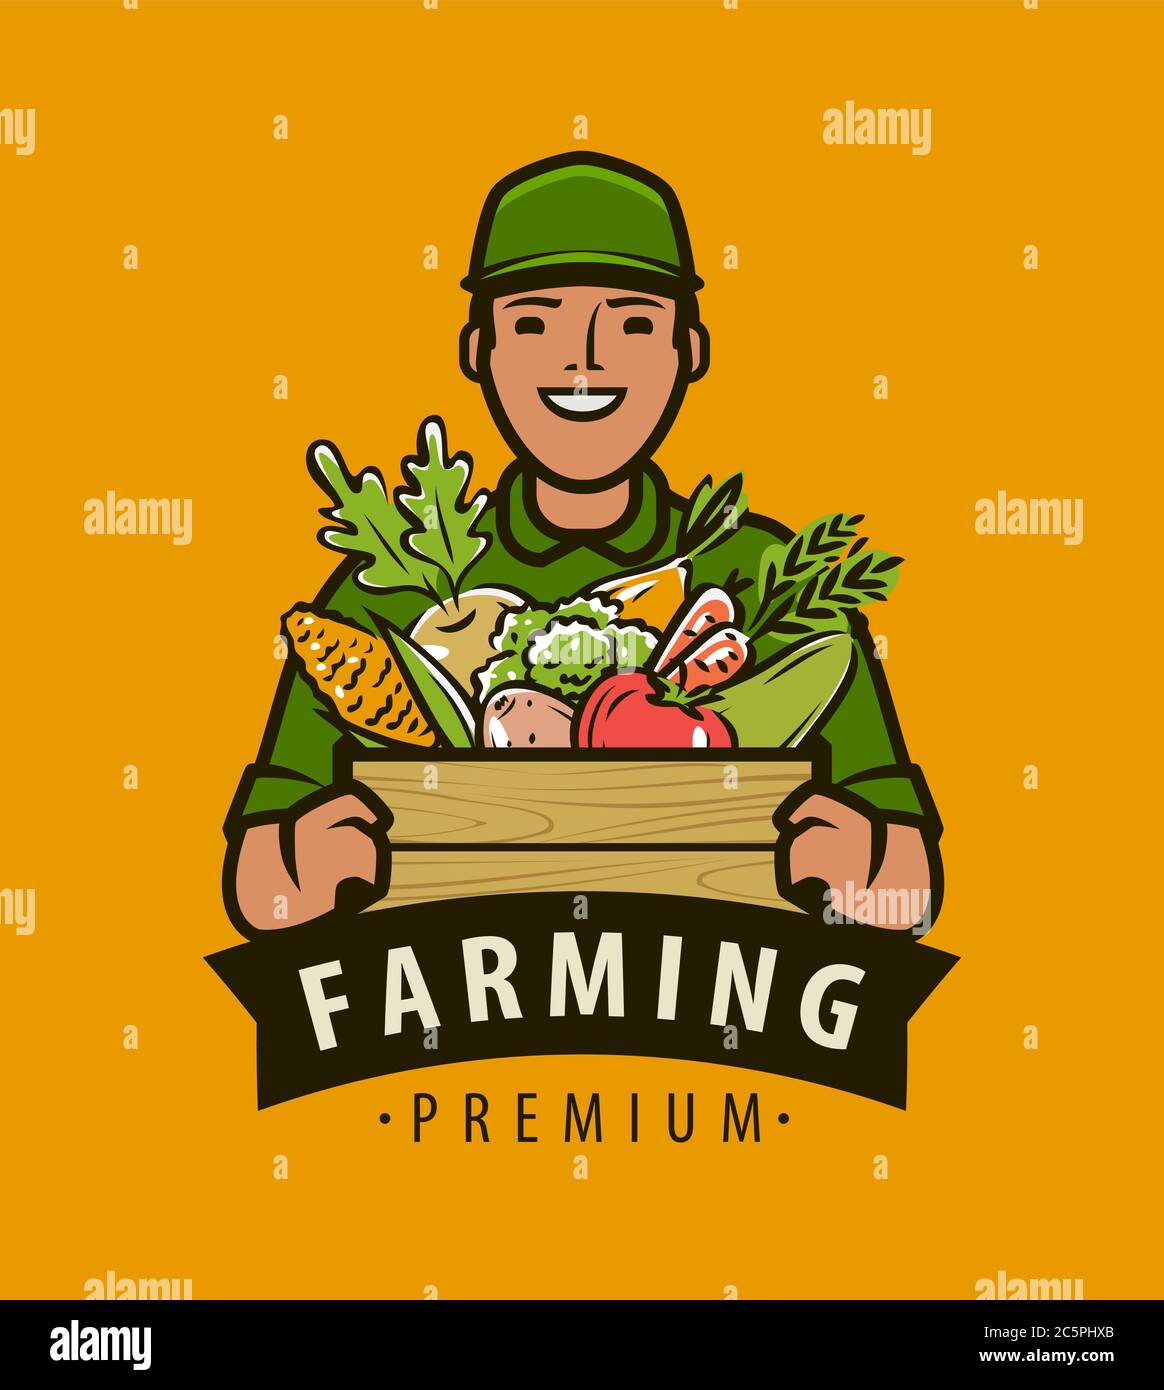 Premium Vector  Fresh vegetables cartoon